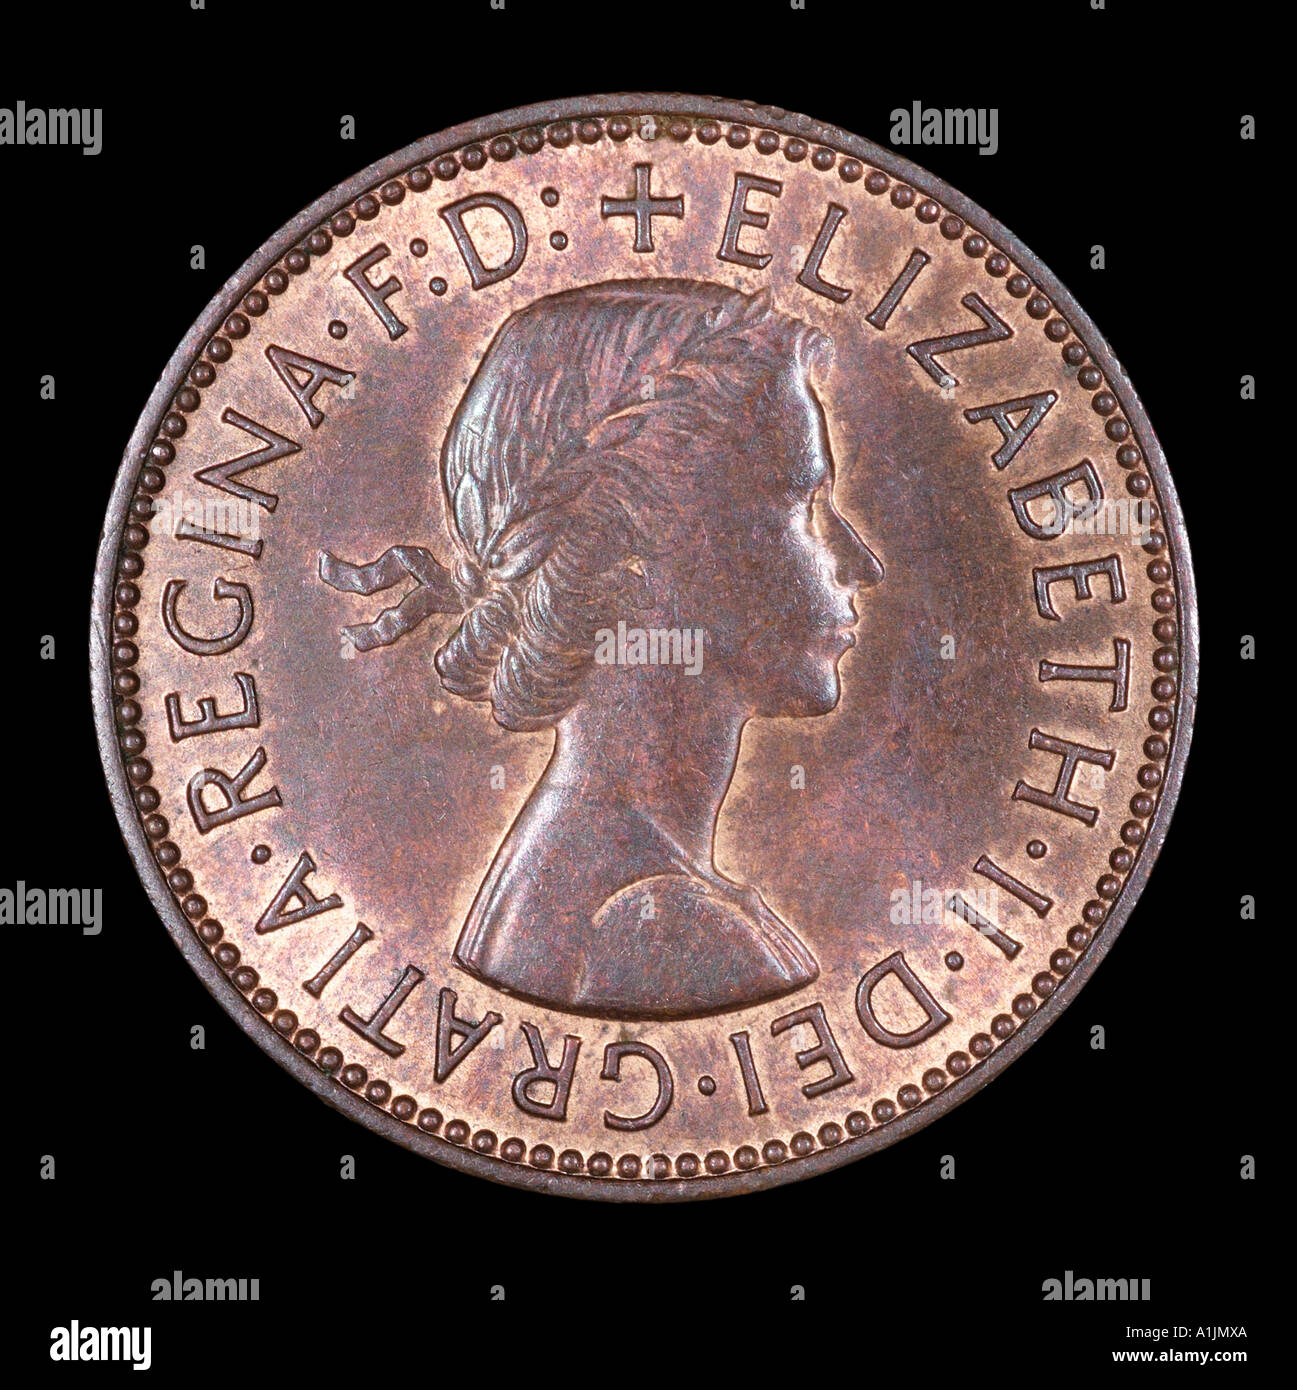 Queen Elizabeth Regina II 2 Reg fid def pre decimal half penny old pence P 1967 copper bright head right profile gratia Stock Photo